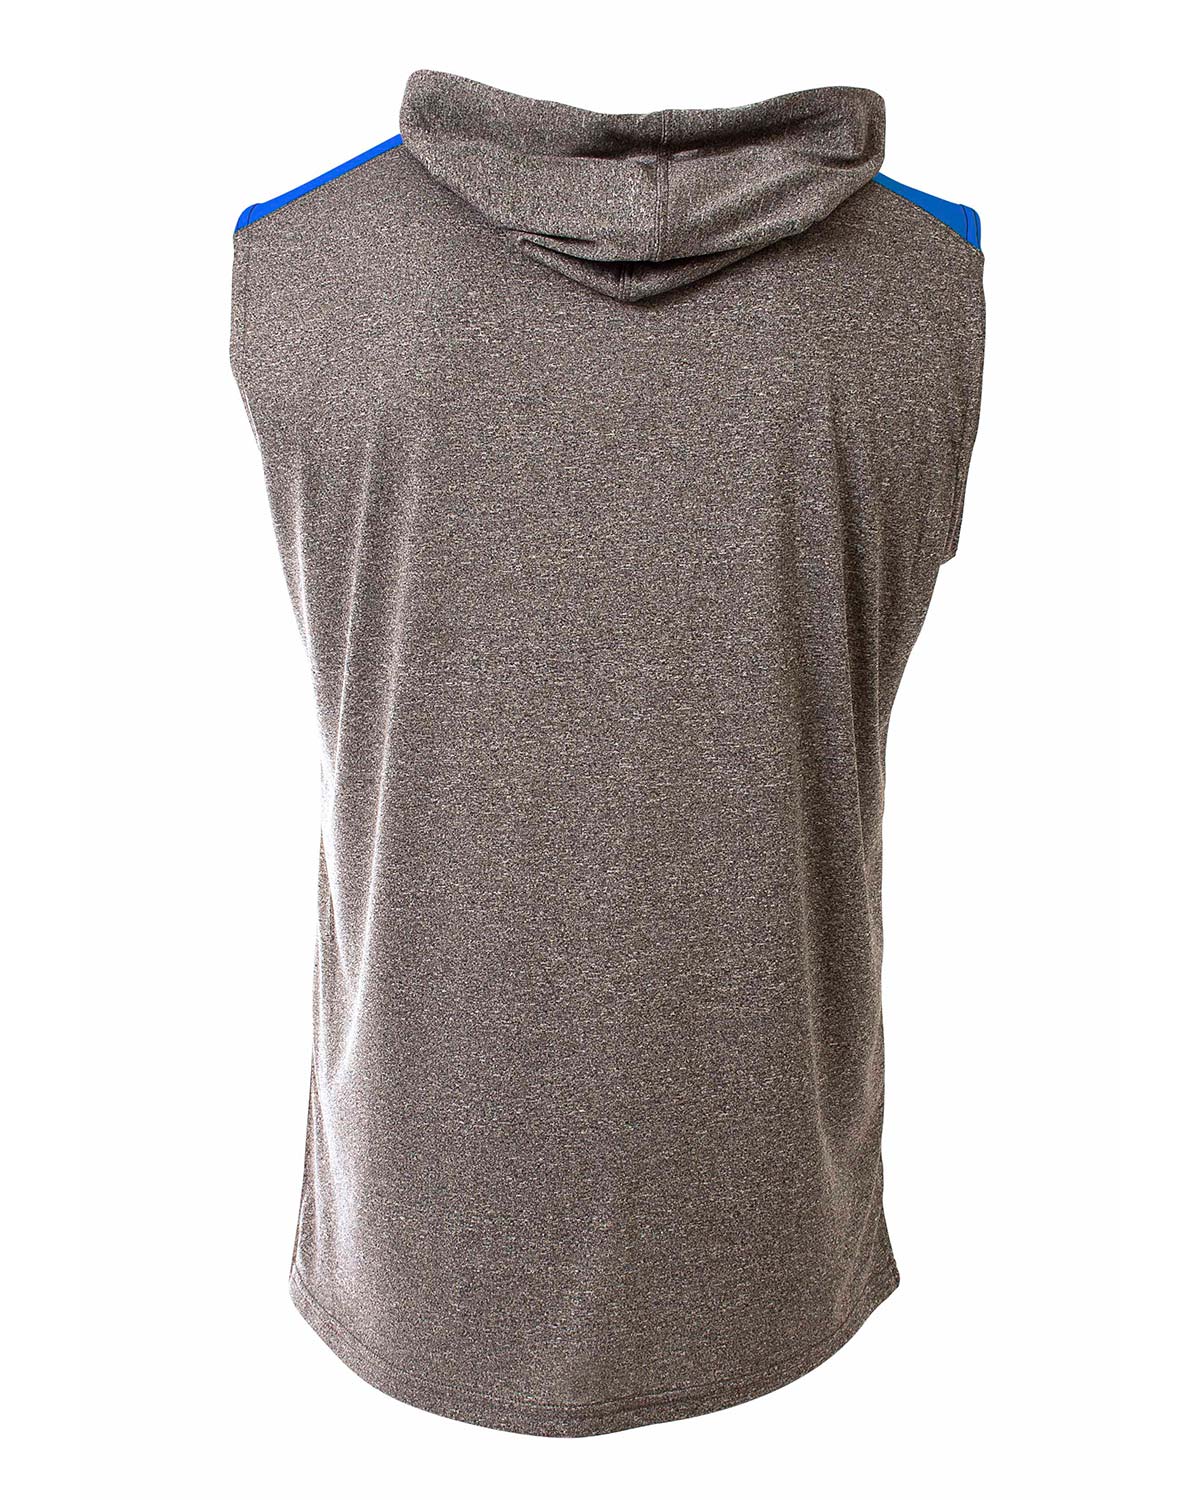 'A4 N3031 Tourney Sleeveless Hooded T-Shirt'